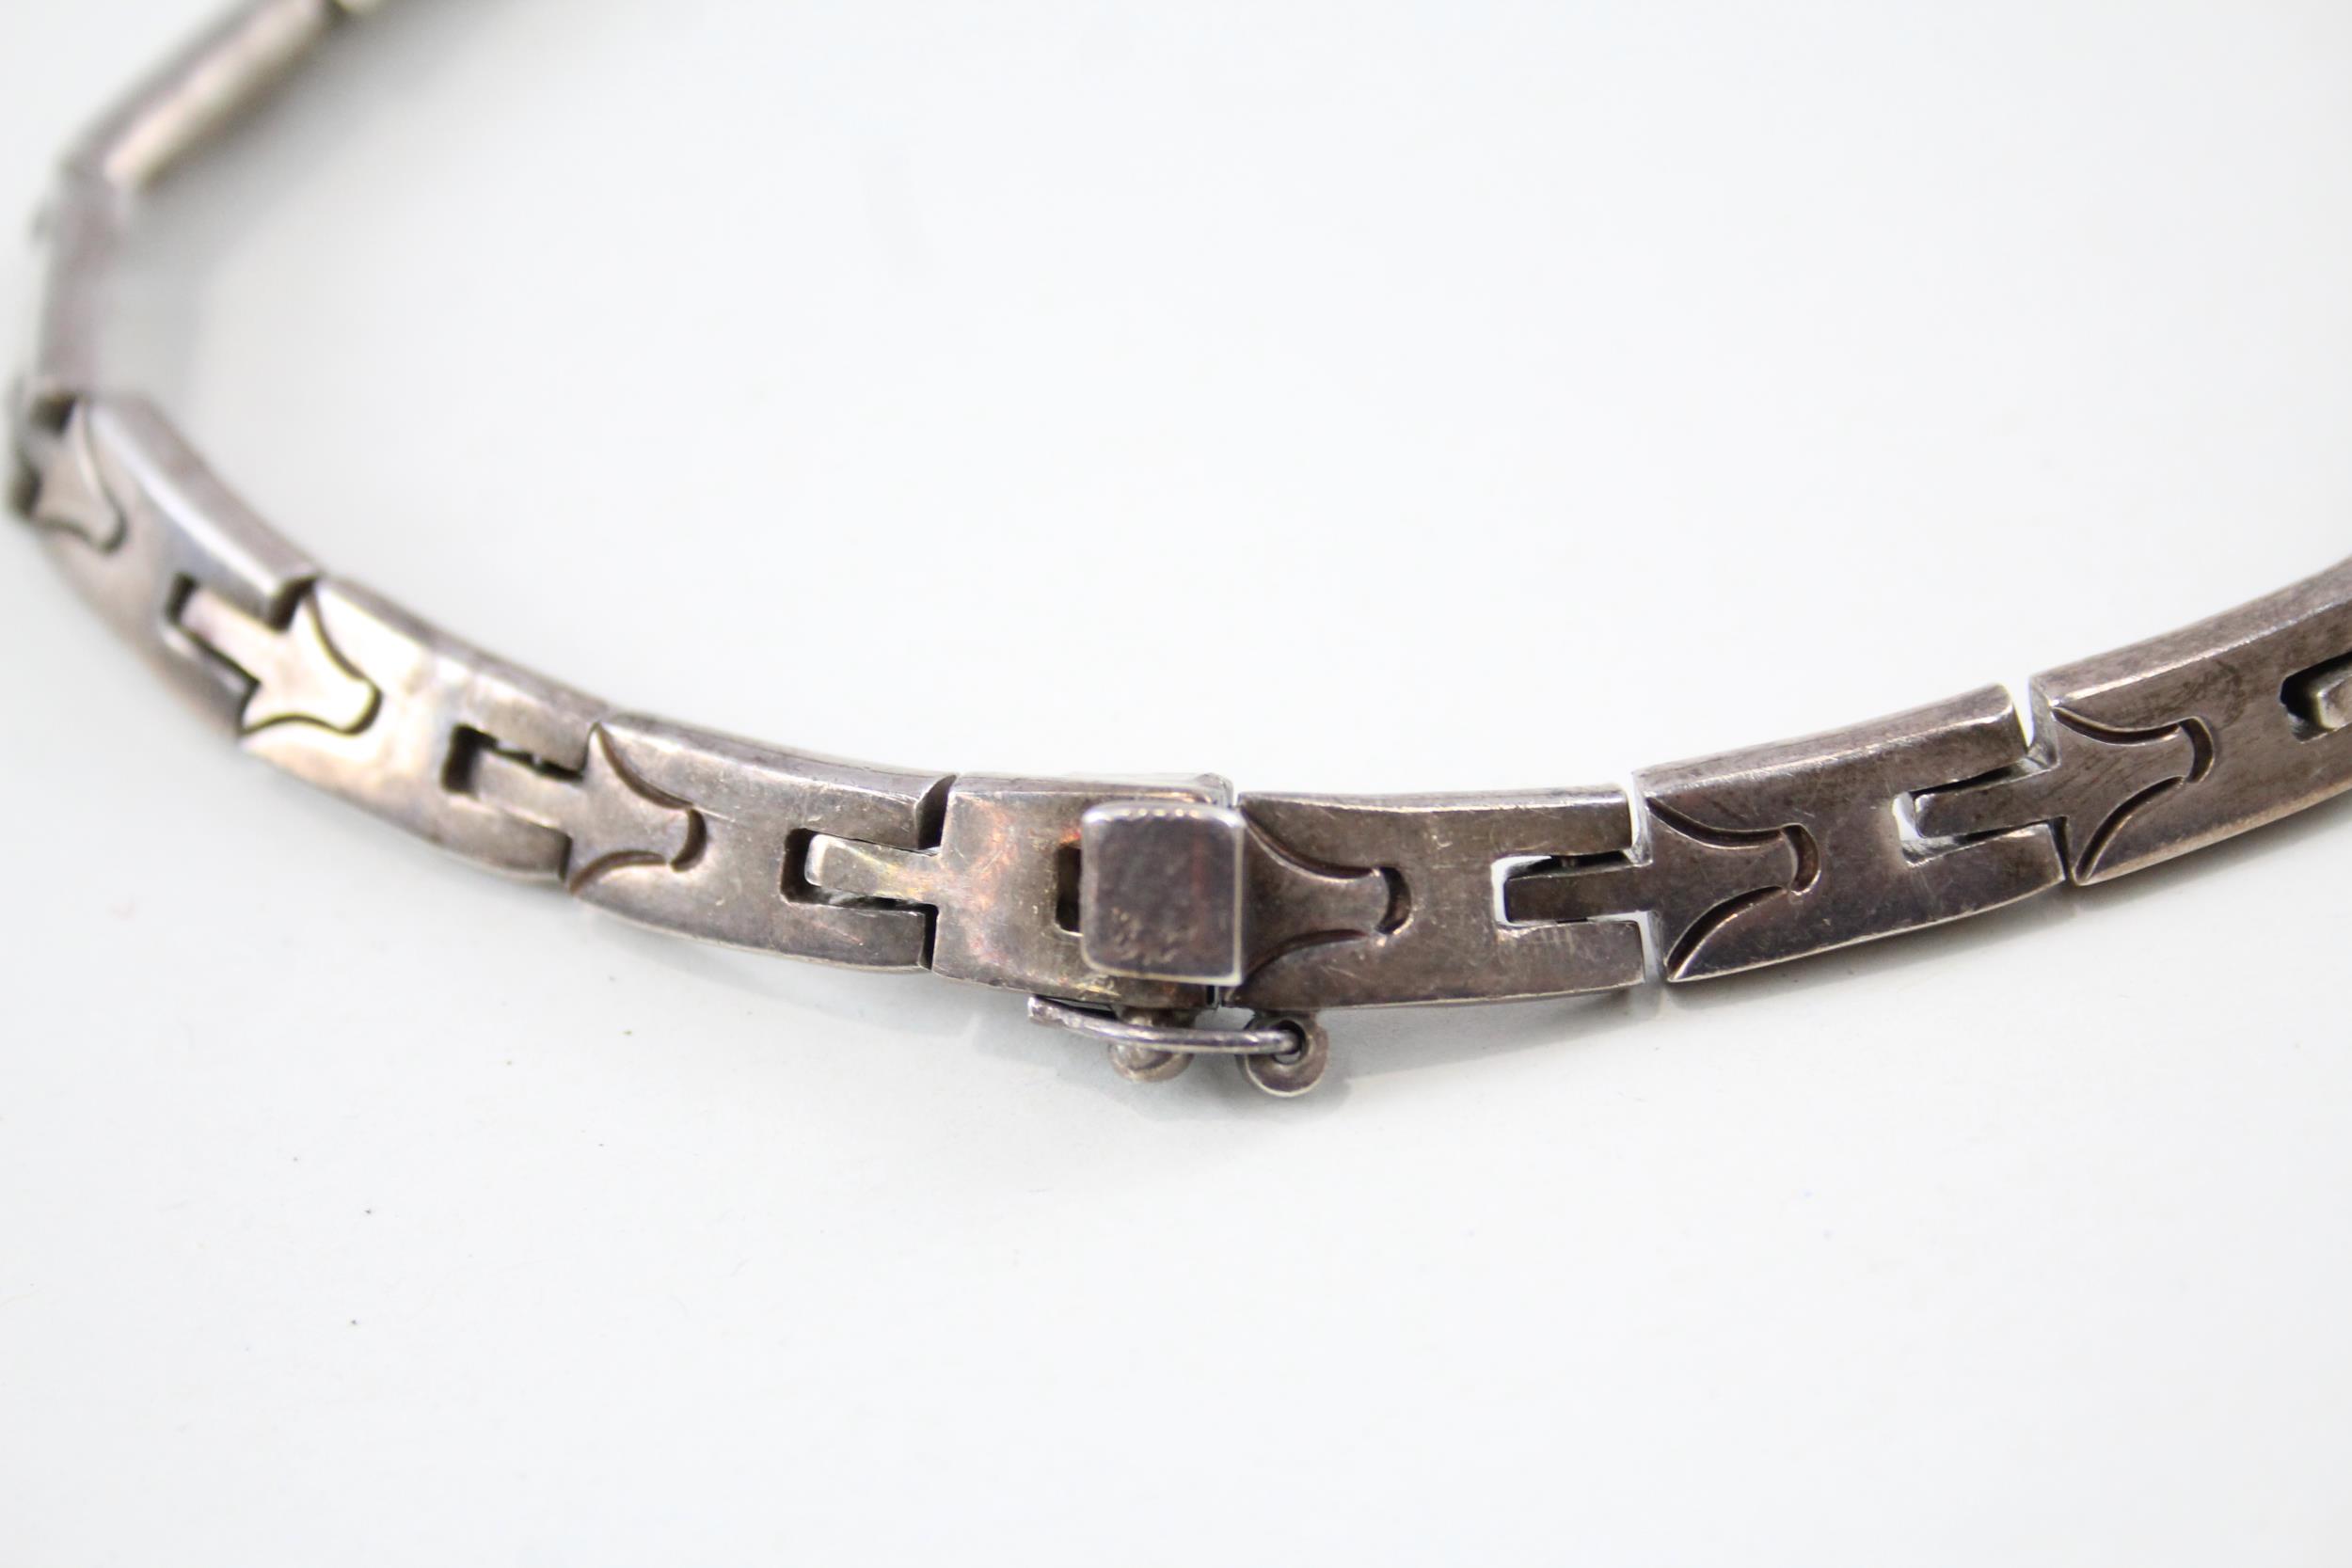 Silver Taxco Mexico collar necklace (100g) - Image 3 of 5